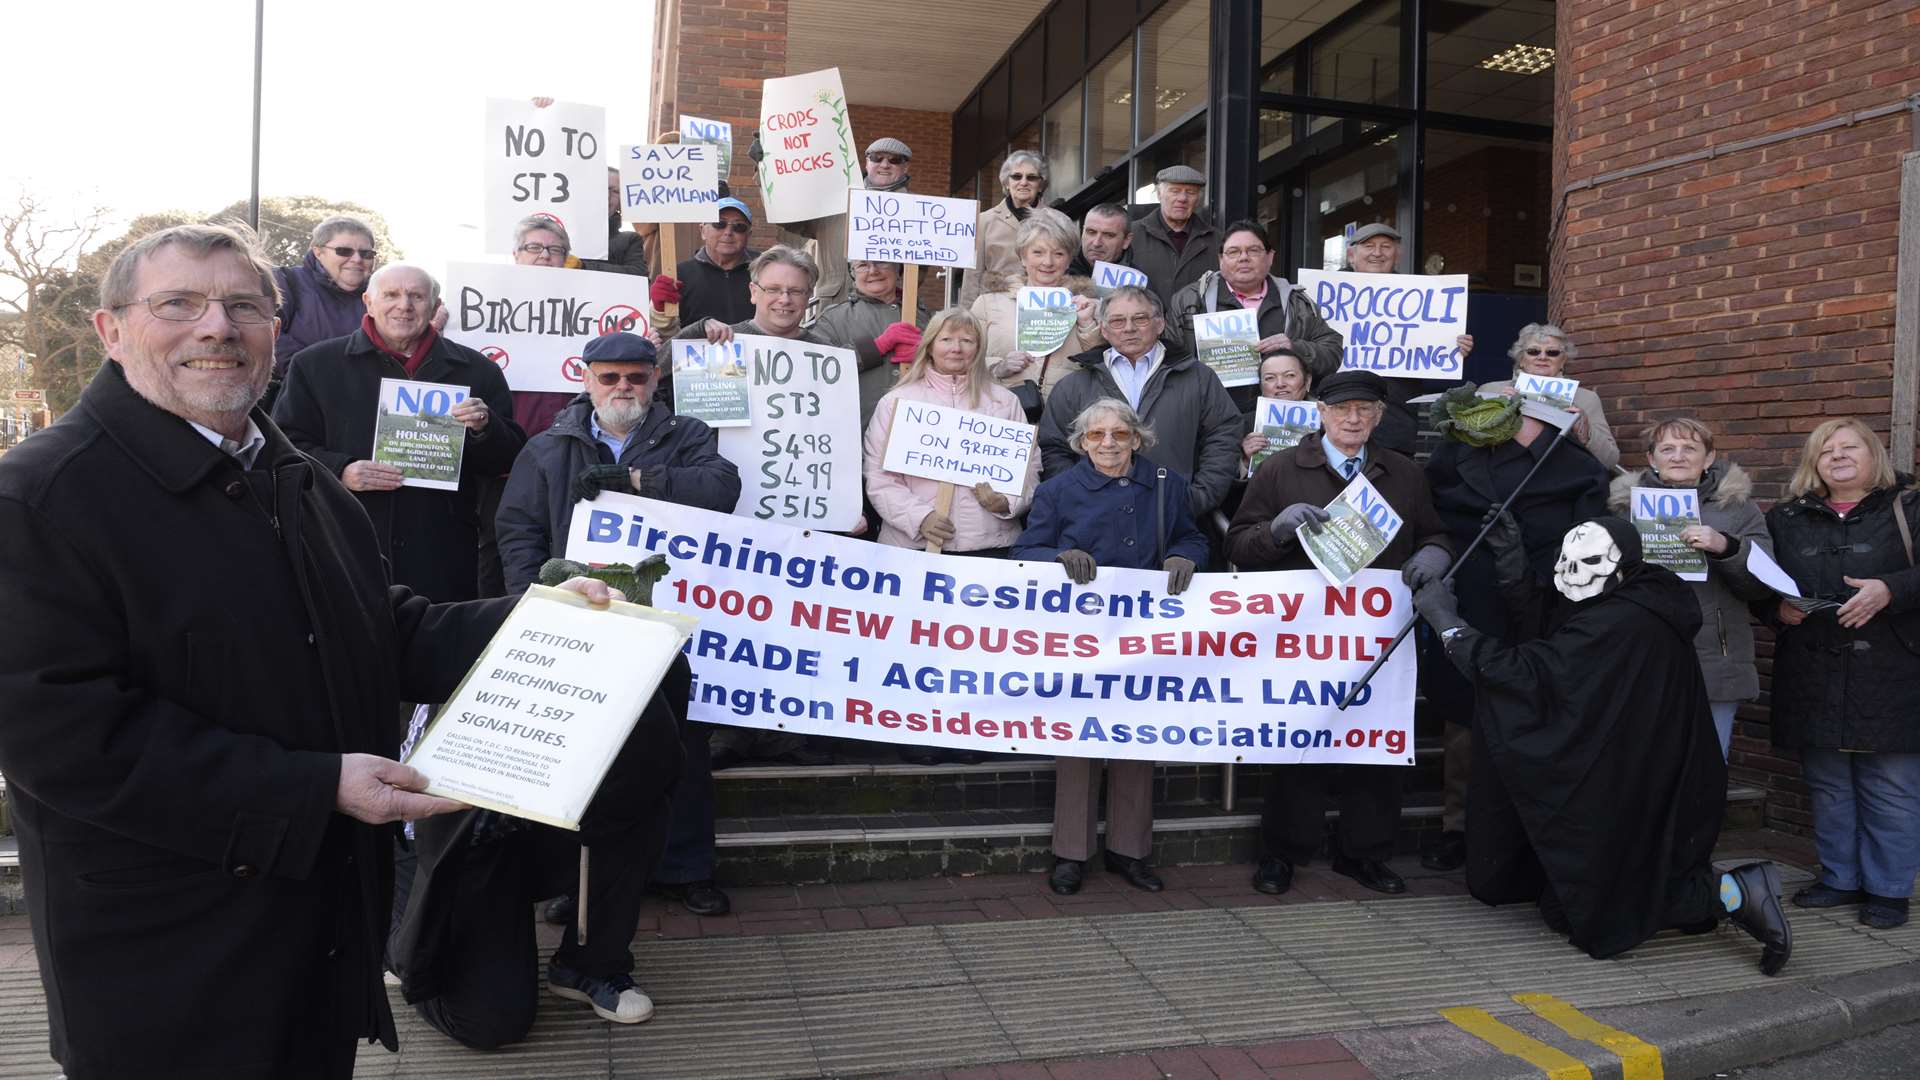 Birchington Residents Association